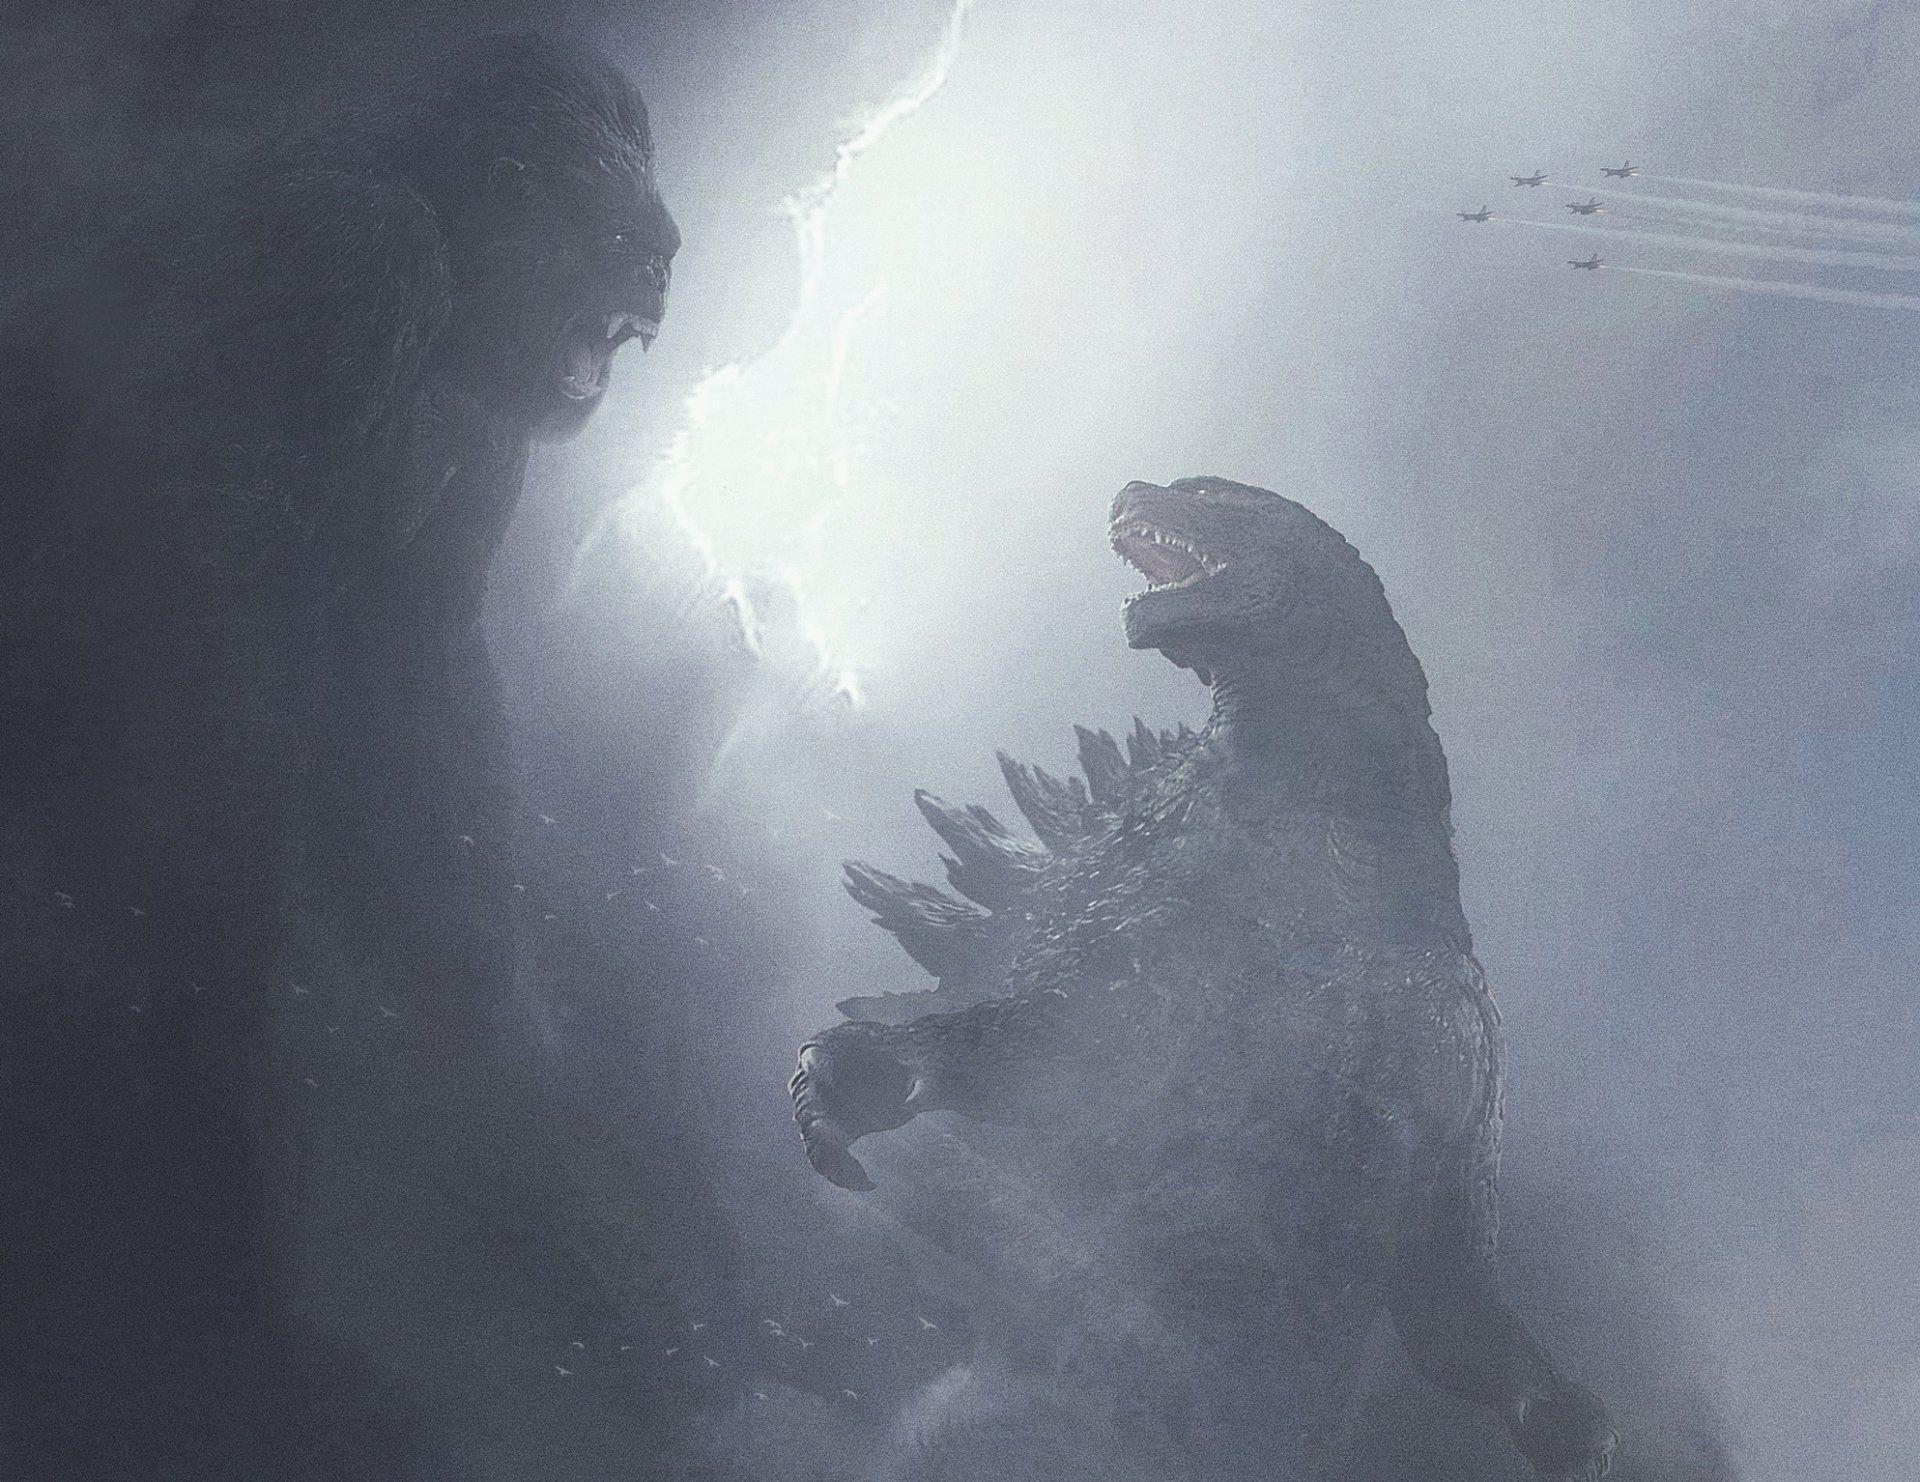 50+ Godzilla vs Kong HD Wallpapers and Backgrounds